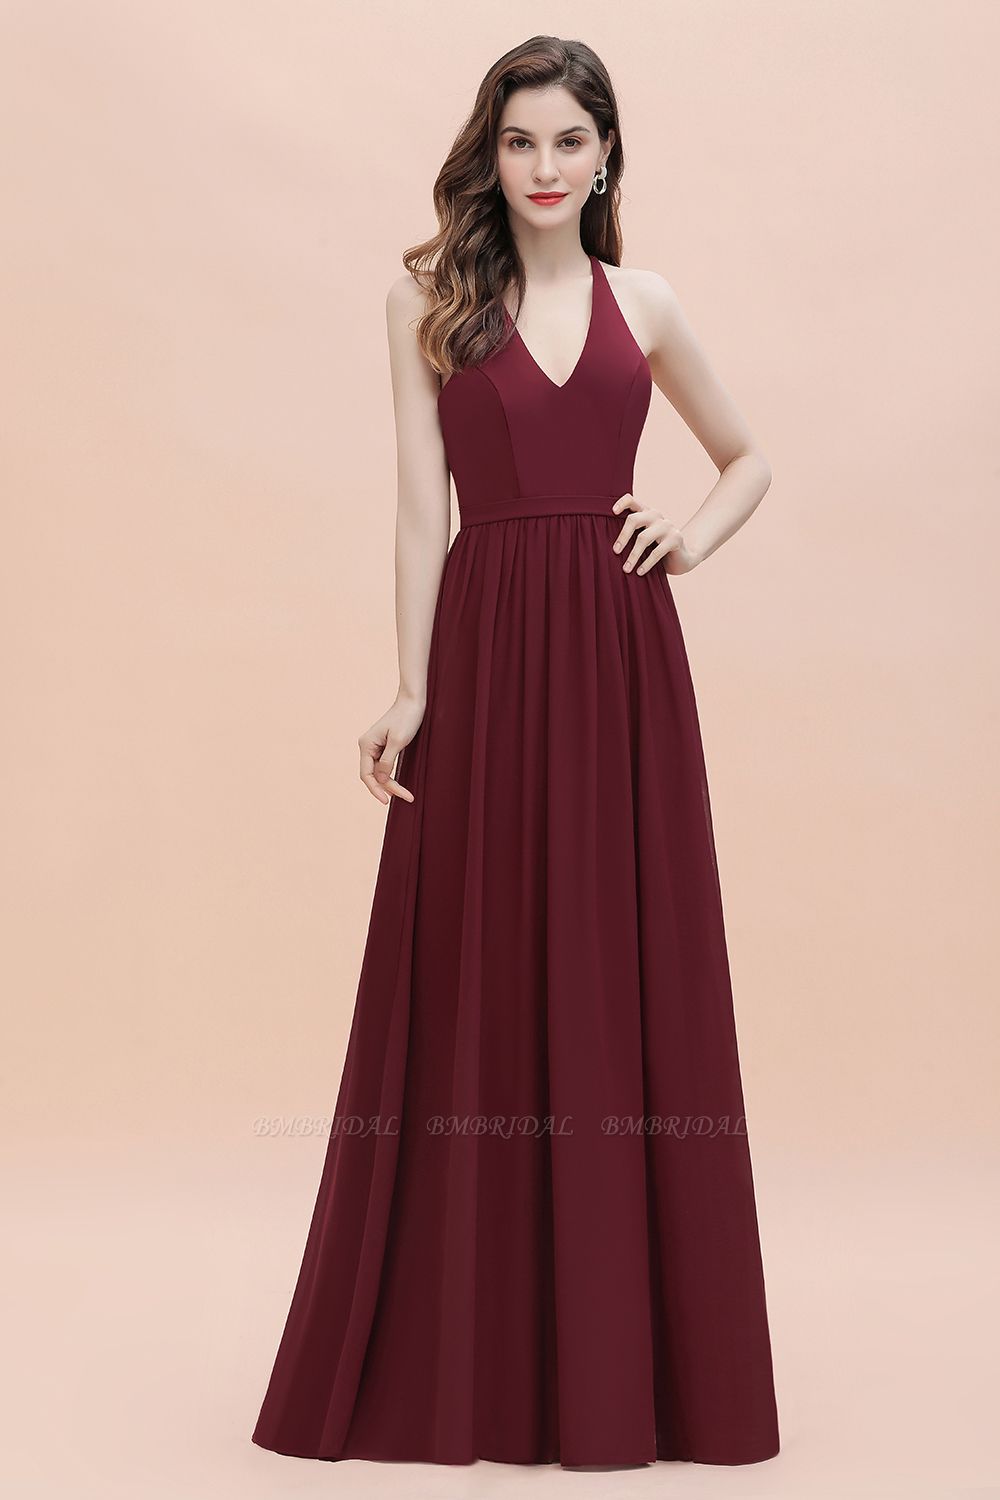 BMbridal A-Line Lace Burgundy Bridesmaid Dress Lace Sequins Sleeveless Evening Dress